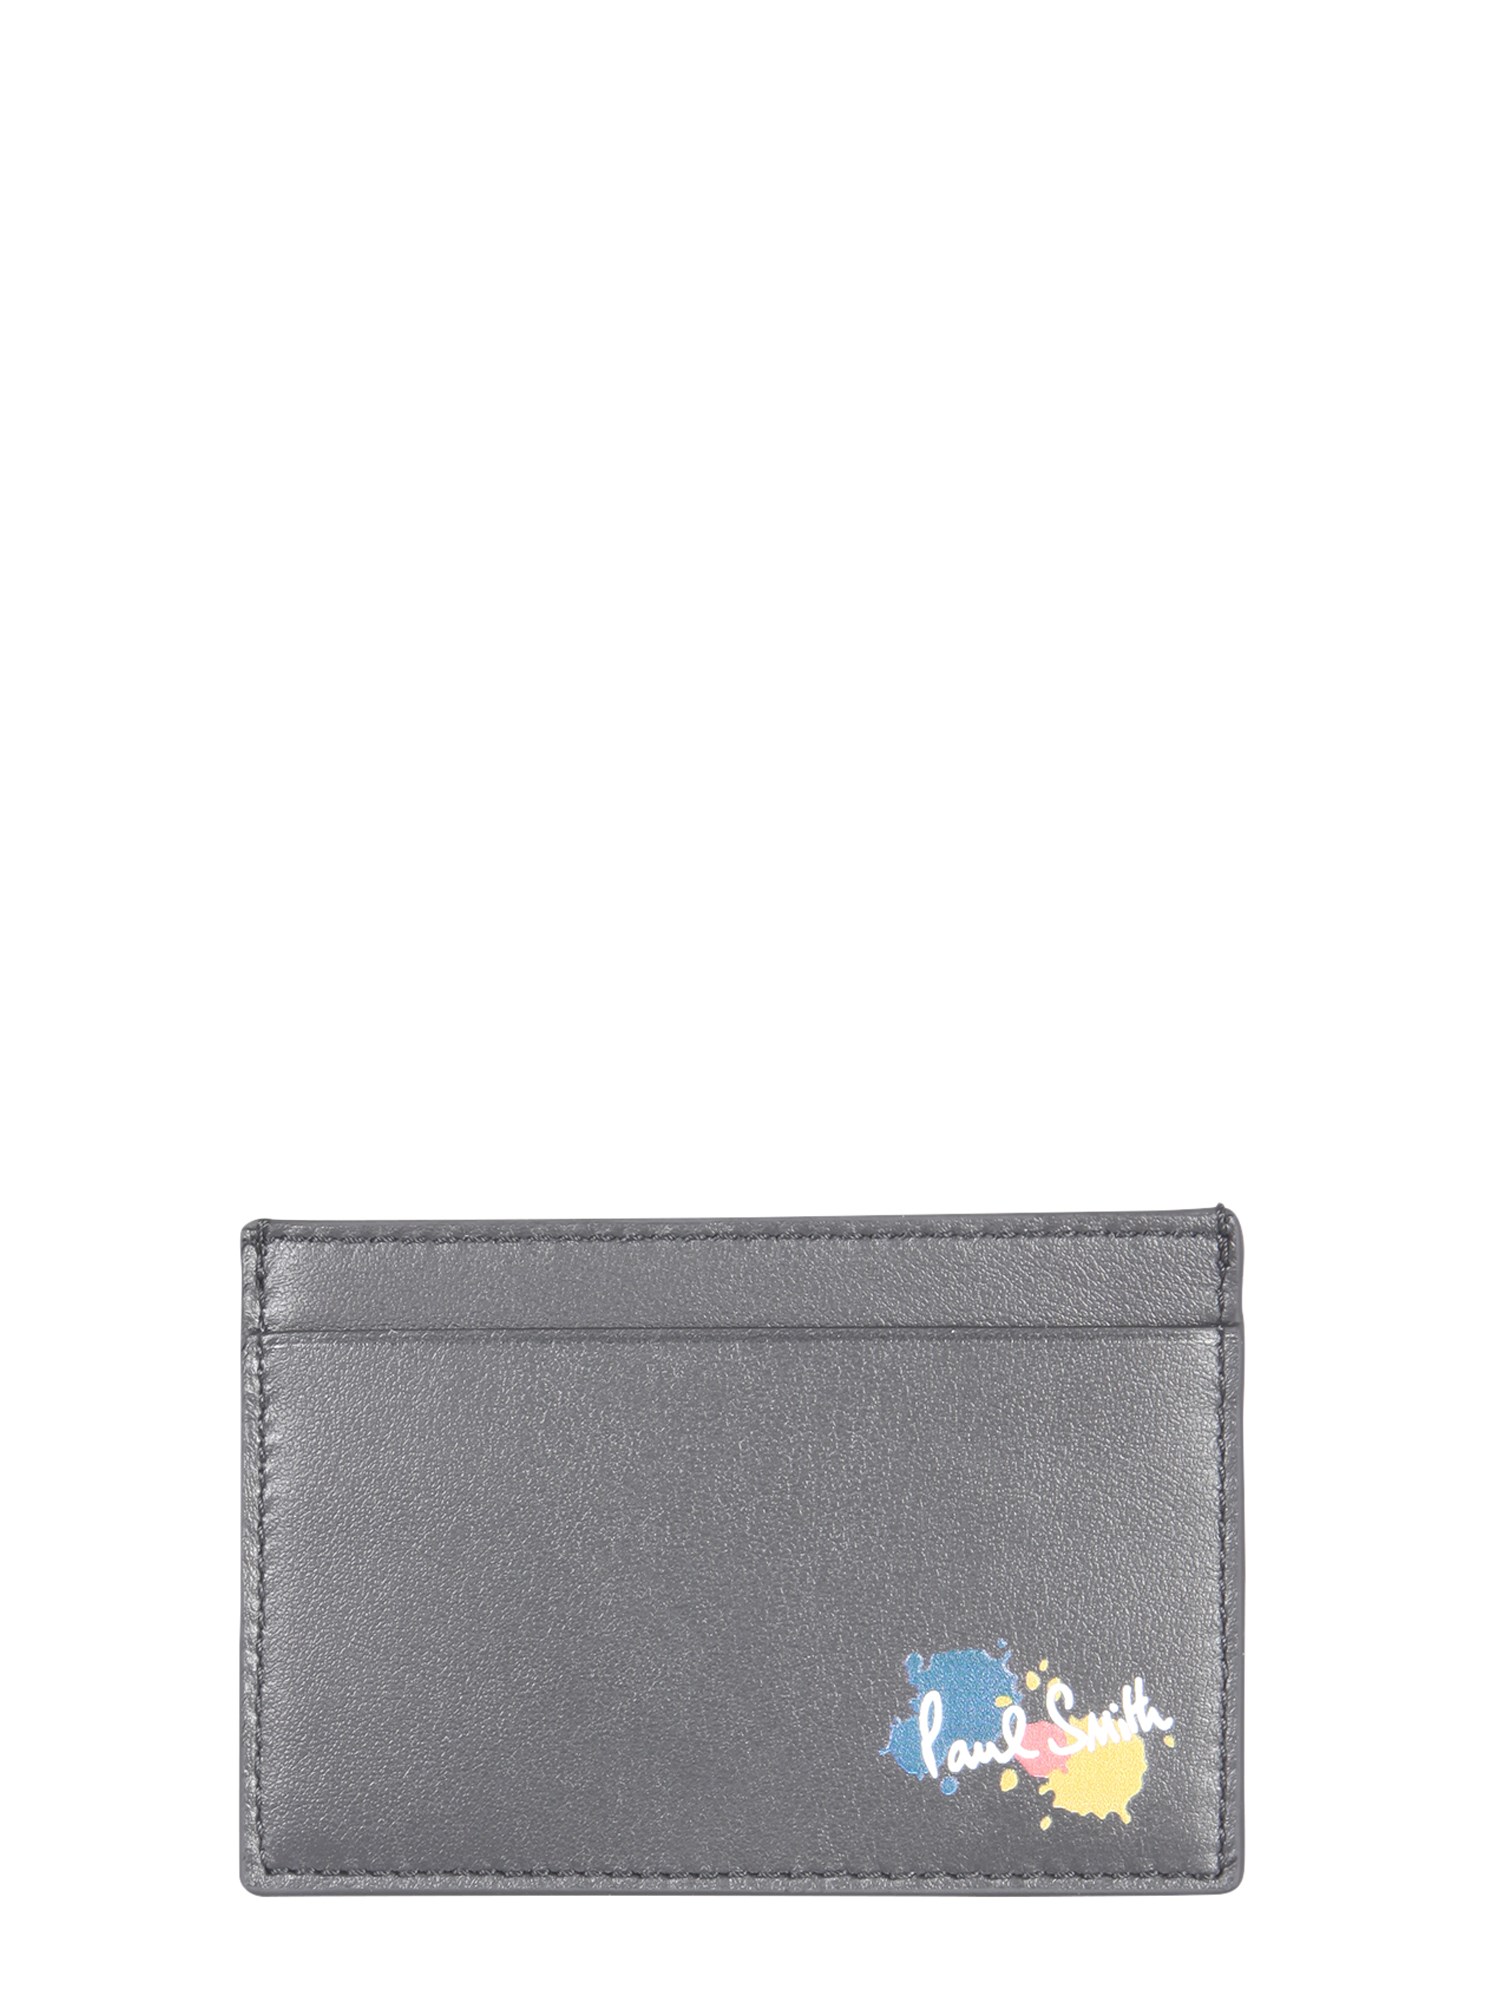 paul smith leather card holder